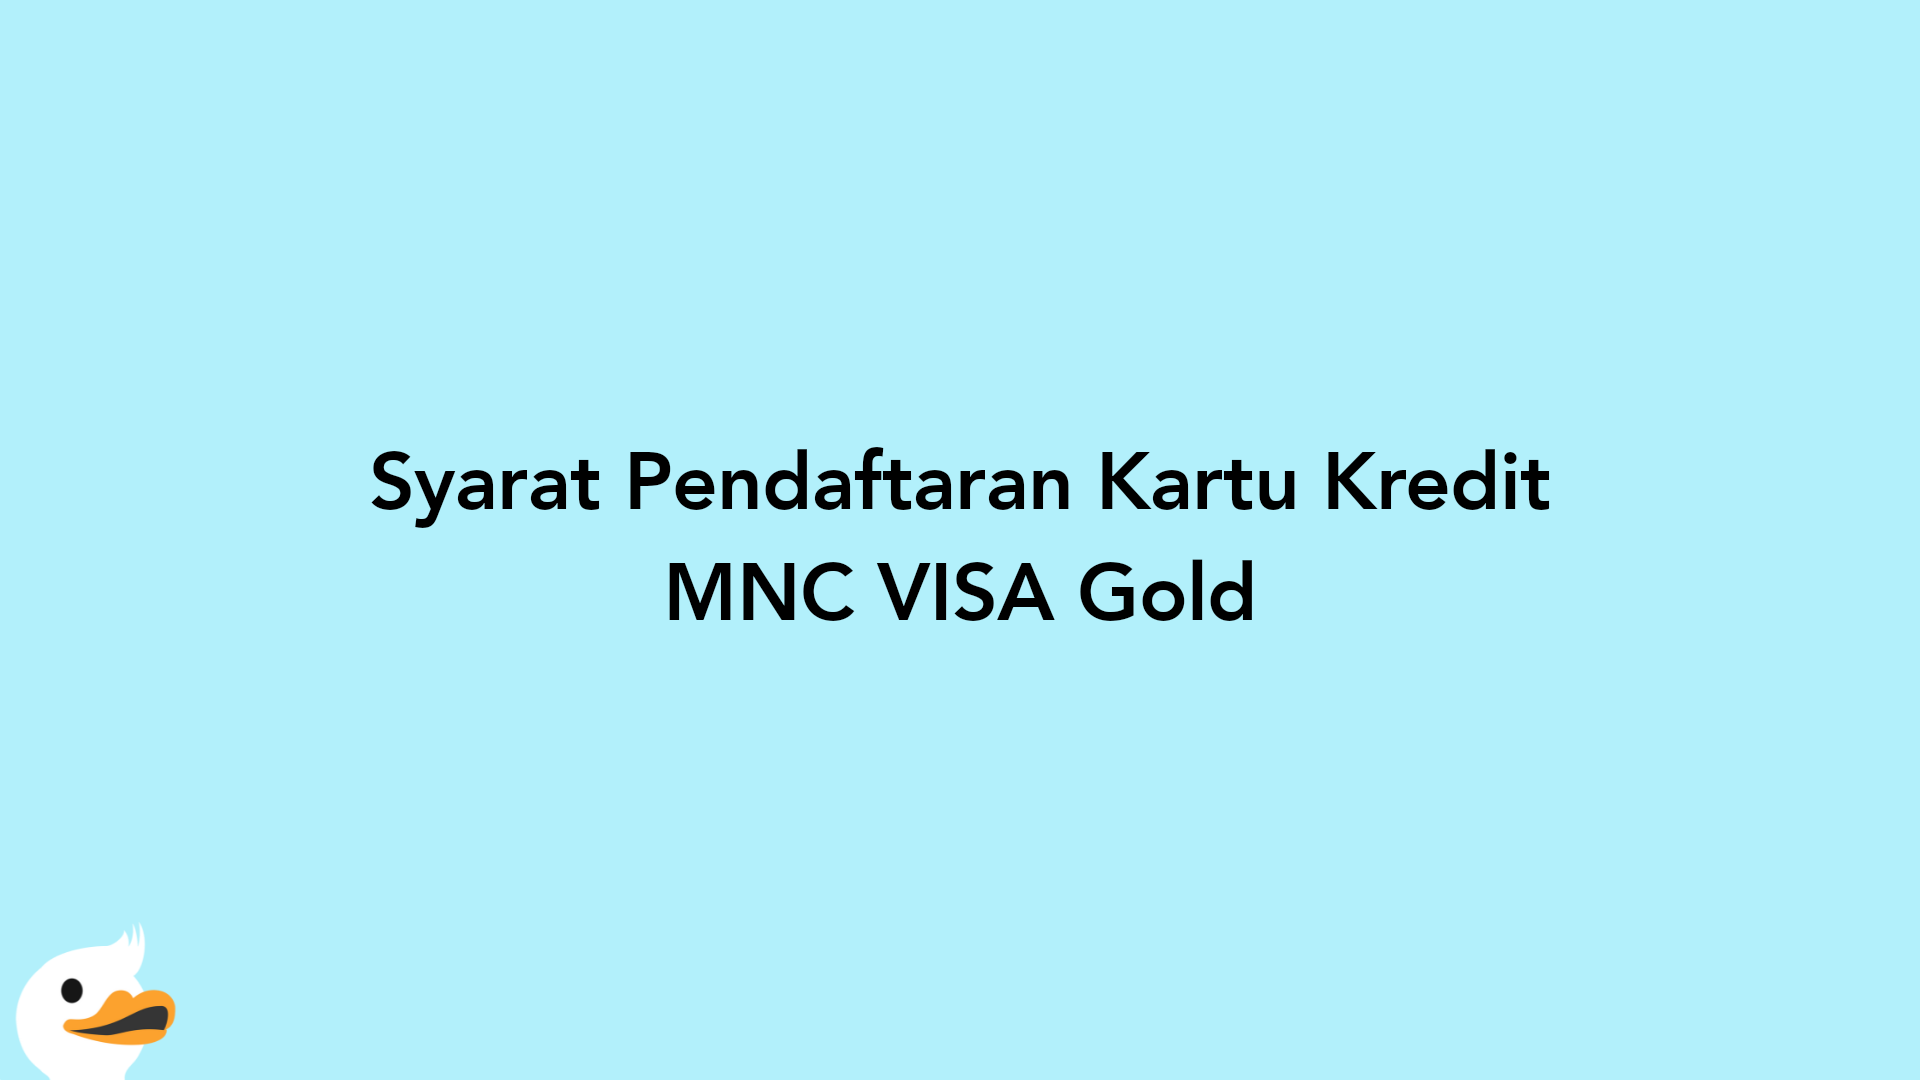 Syarat Pendaftaran Kartu Kredit MNC VISA Gold